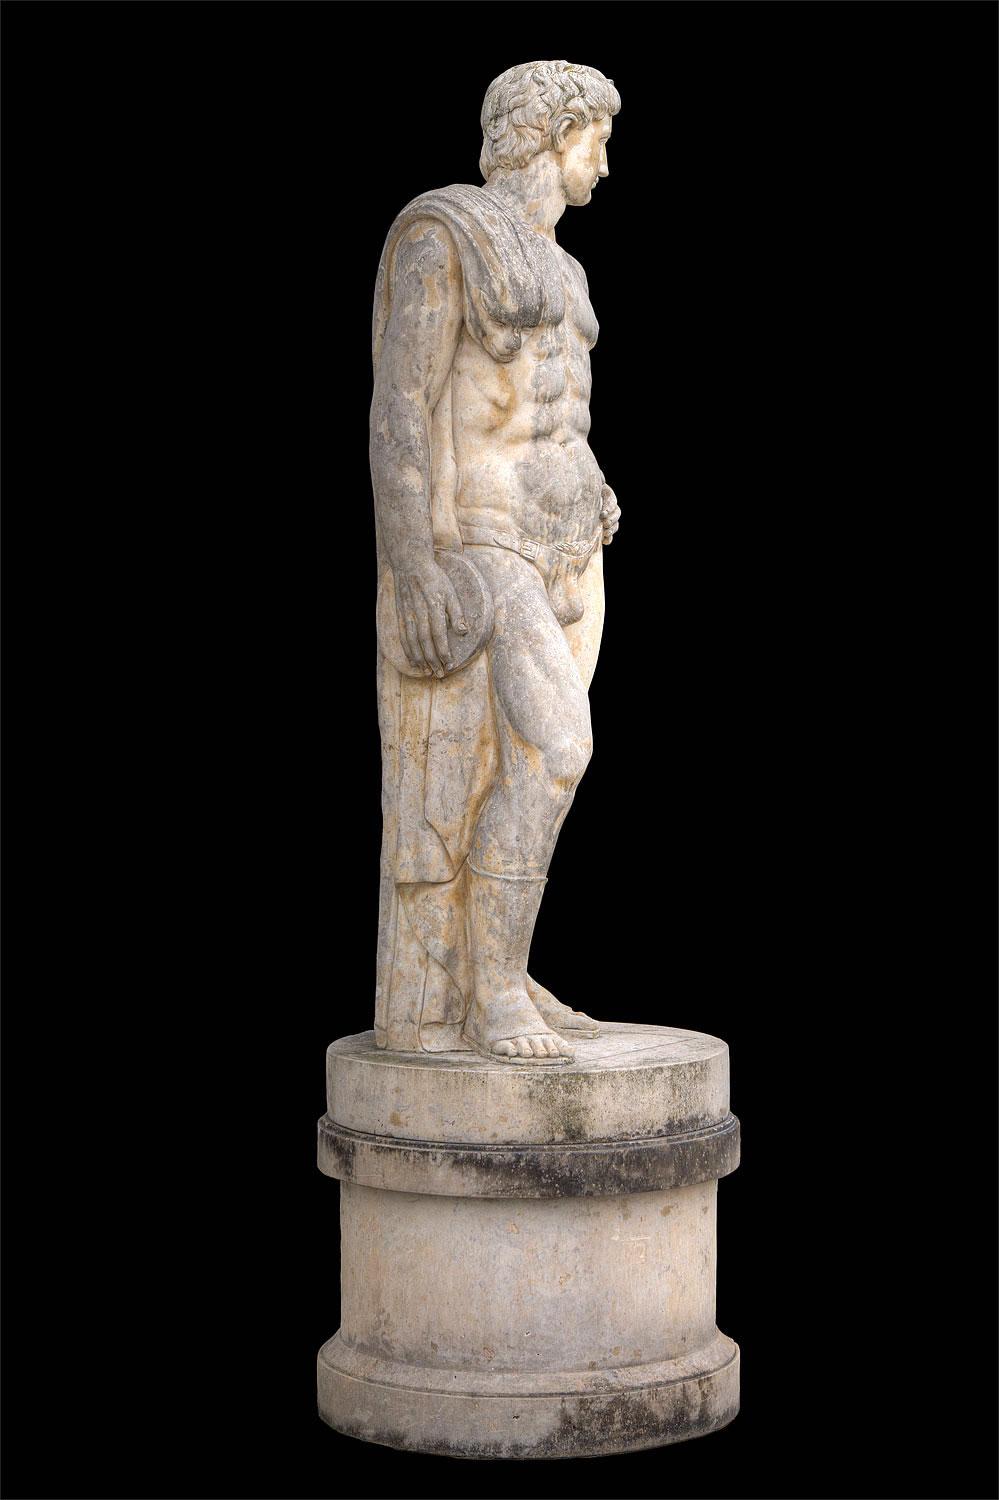  Figuratif figuratif italien en marbre monumental de style rationaliste  Sculptures de nus en vente 6